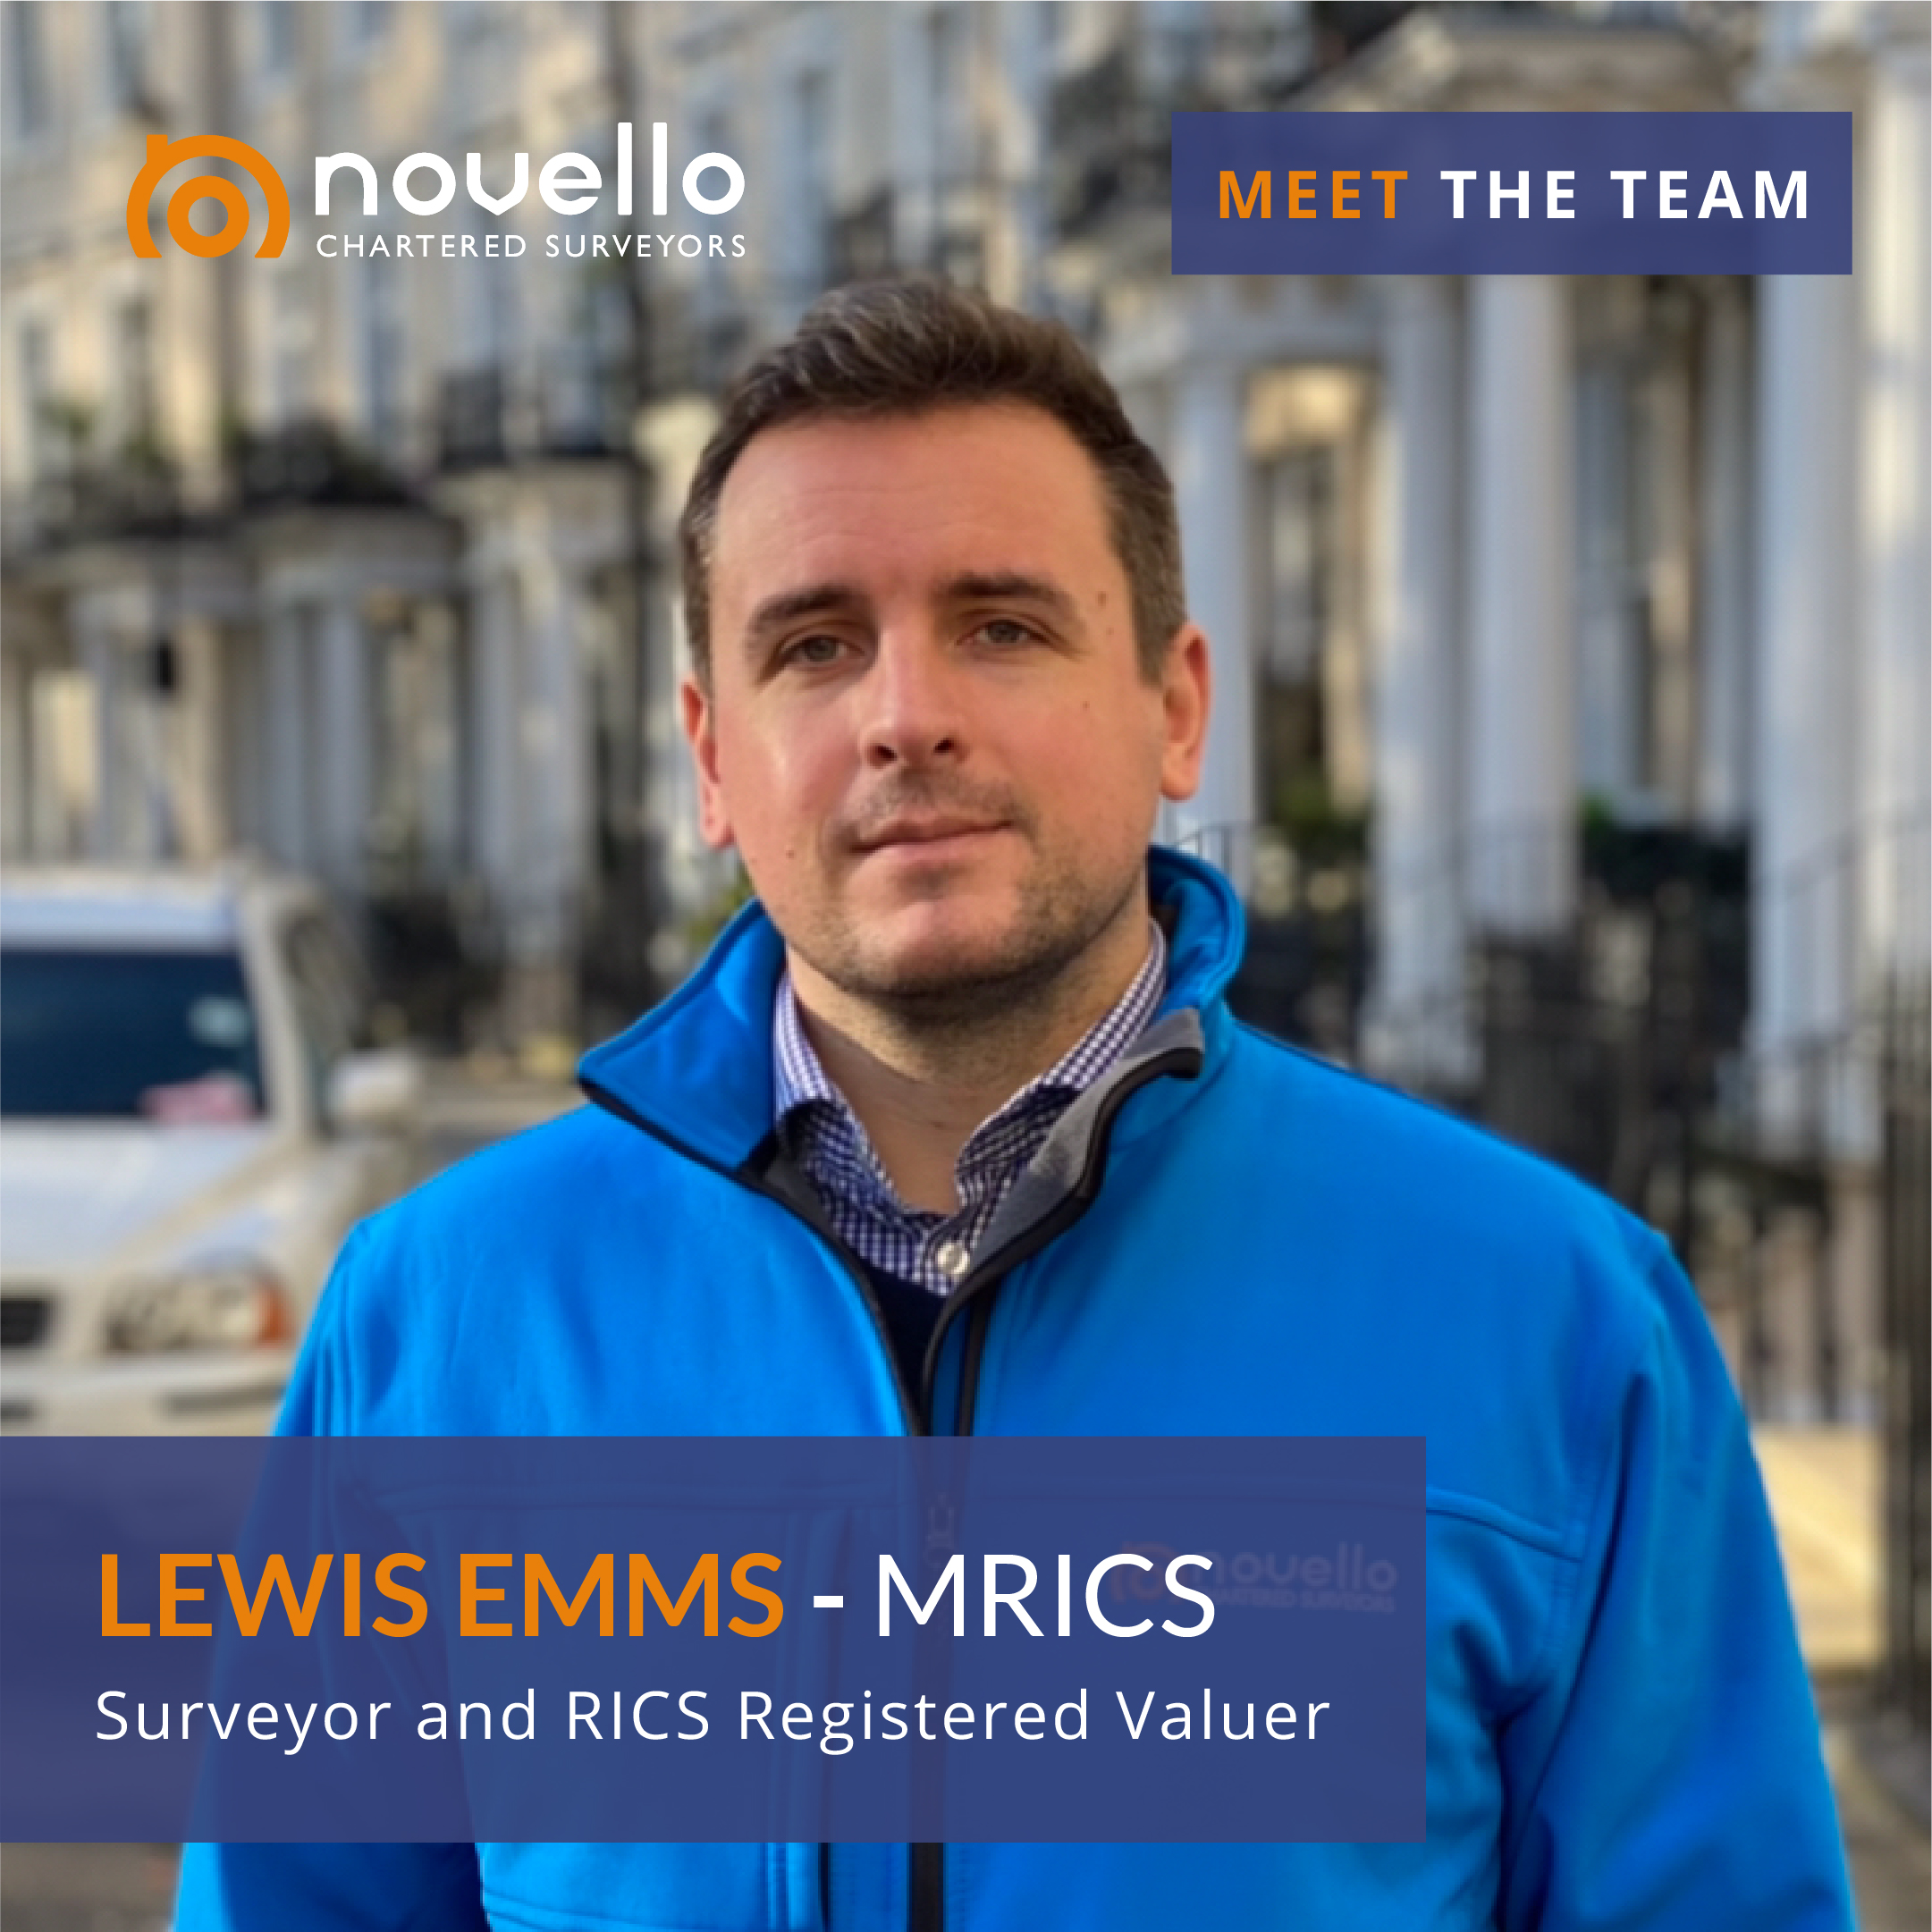 Lewis Emms - Senior Chartered Surveyor and Valuer at Novello